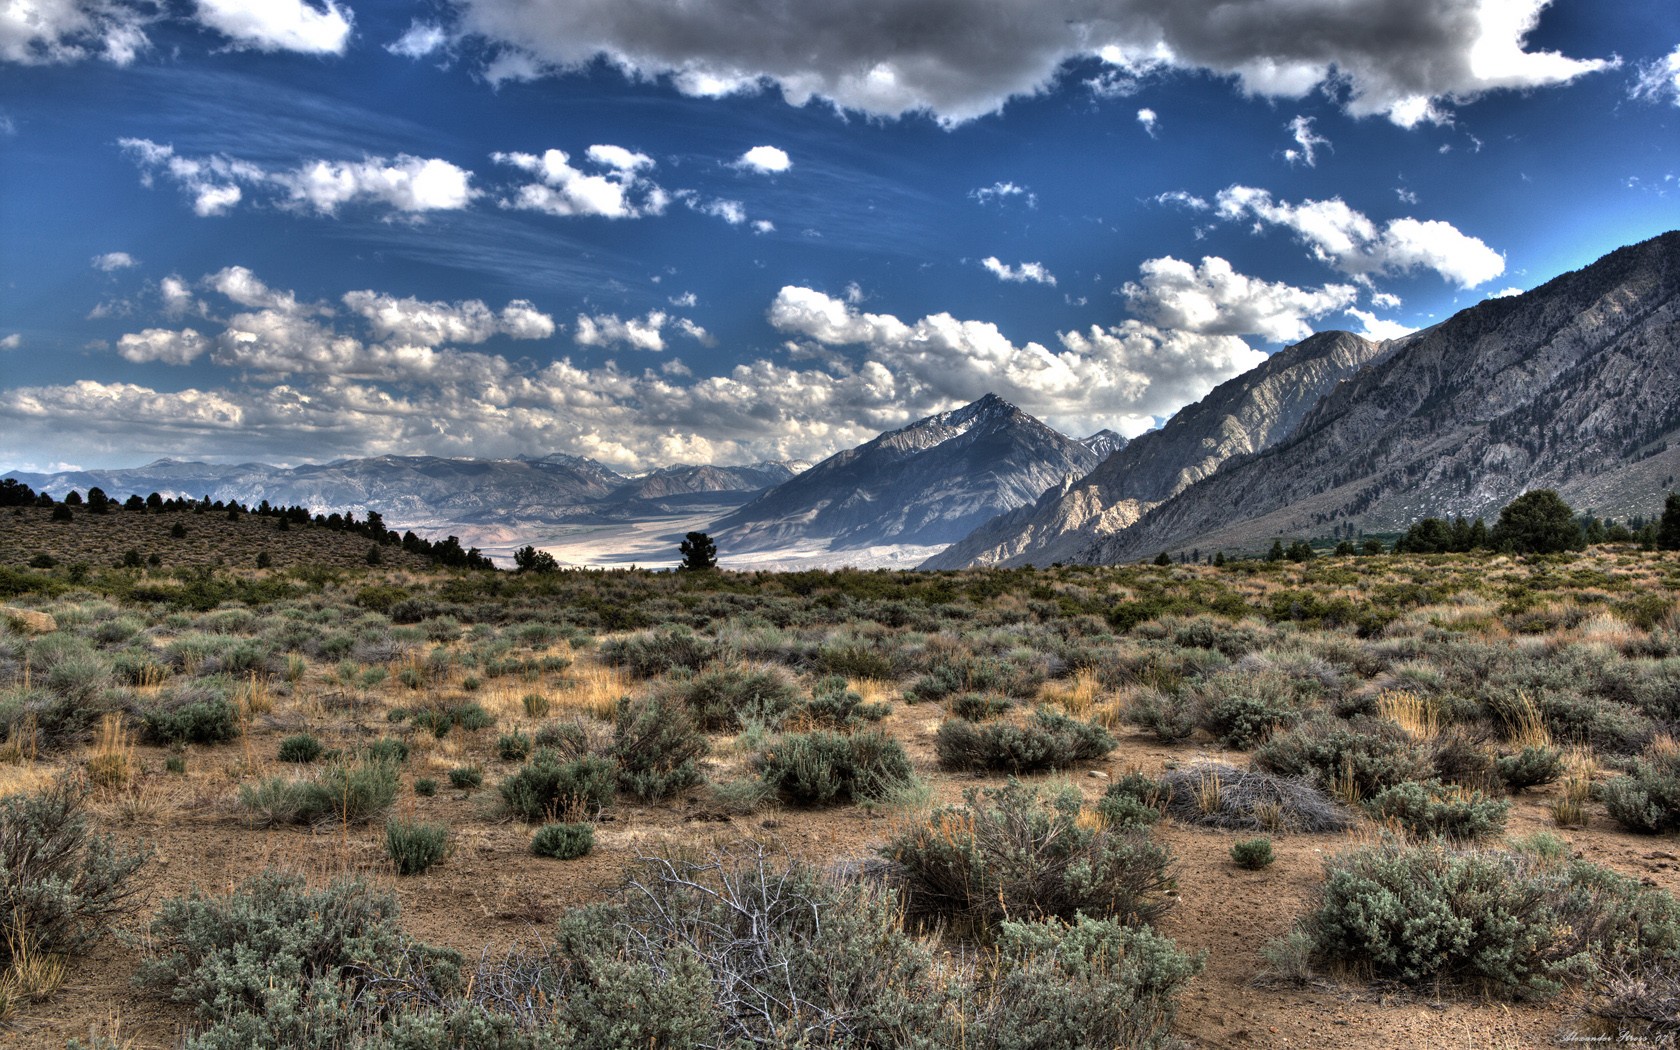 General 1680x1050 landscape clouds nature mountains sky plants desert Yosemite Valley